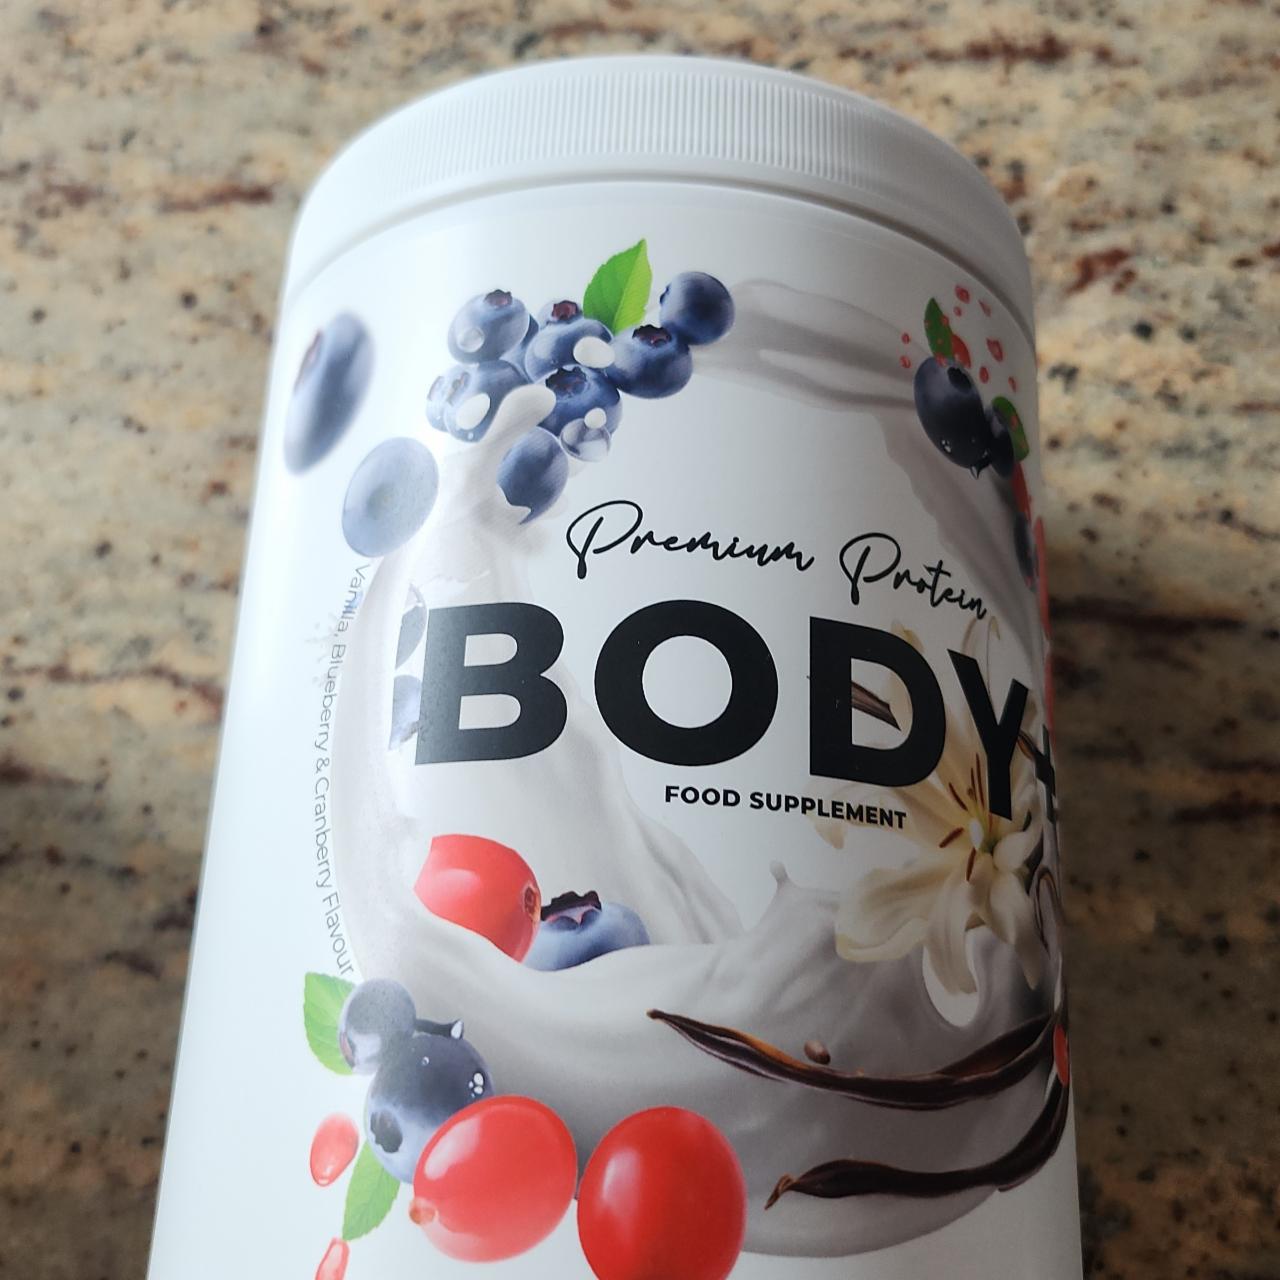 Fotografie - Premium Protein Body Food Supplement